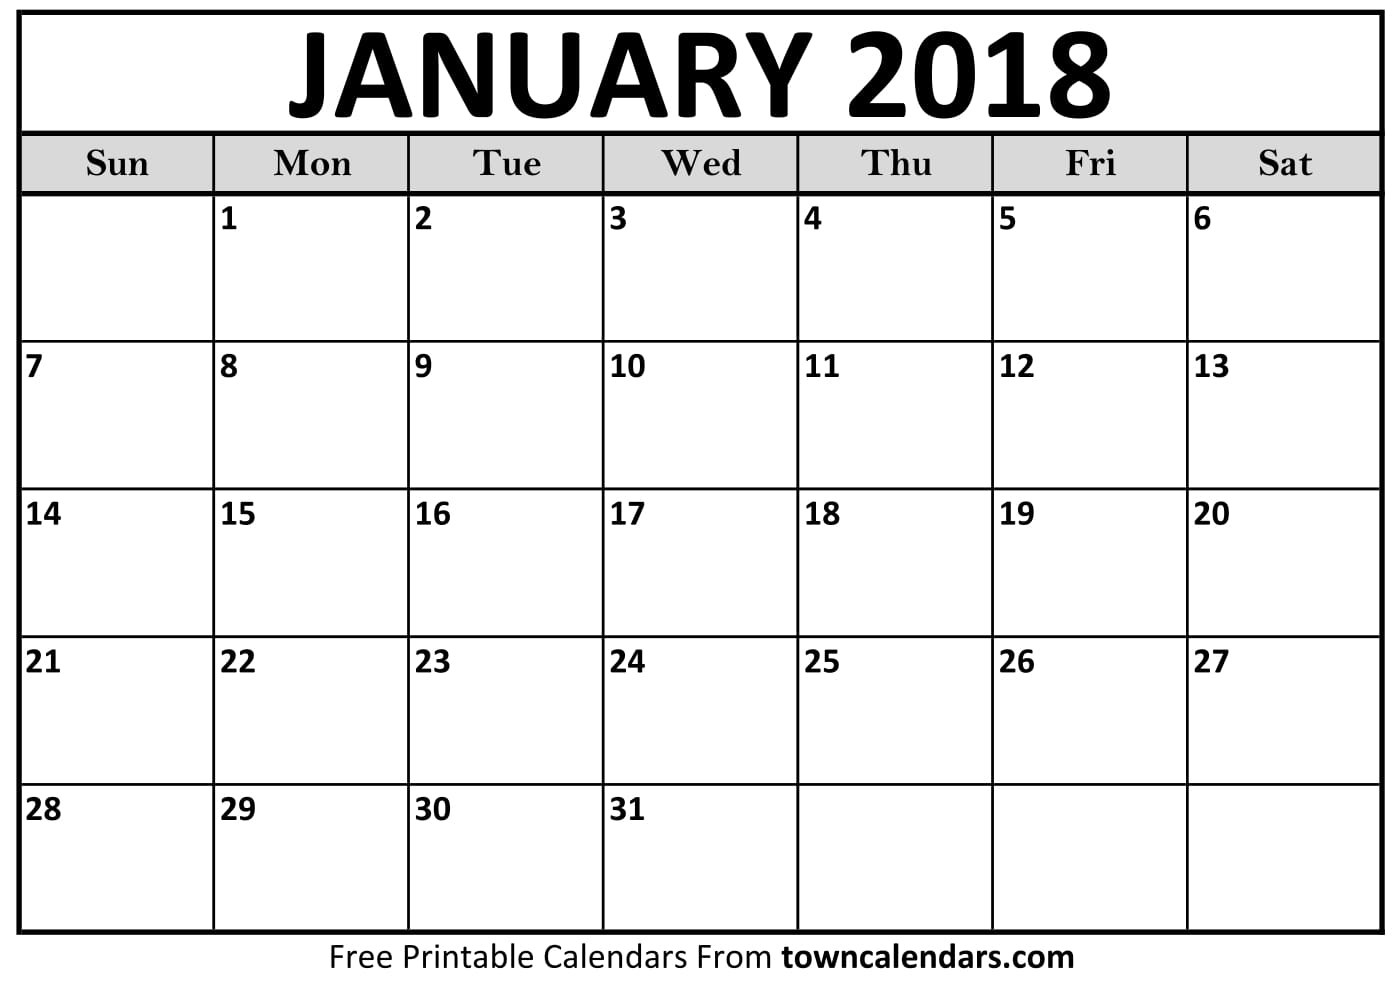 2018 Calendar Printable towncalendars